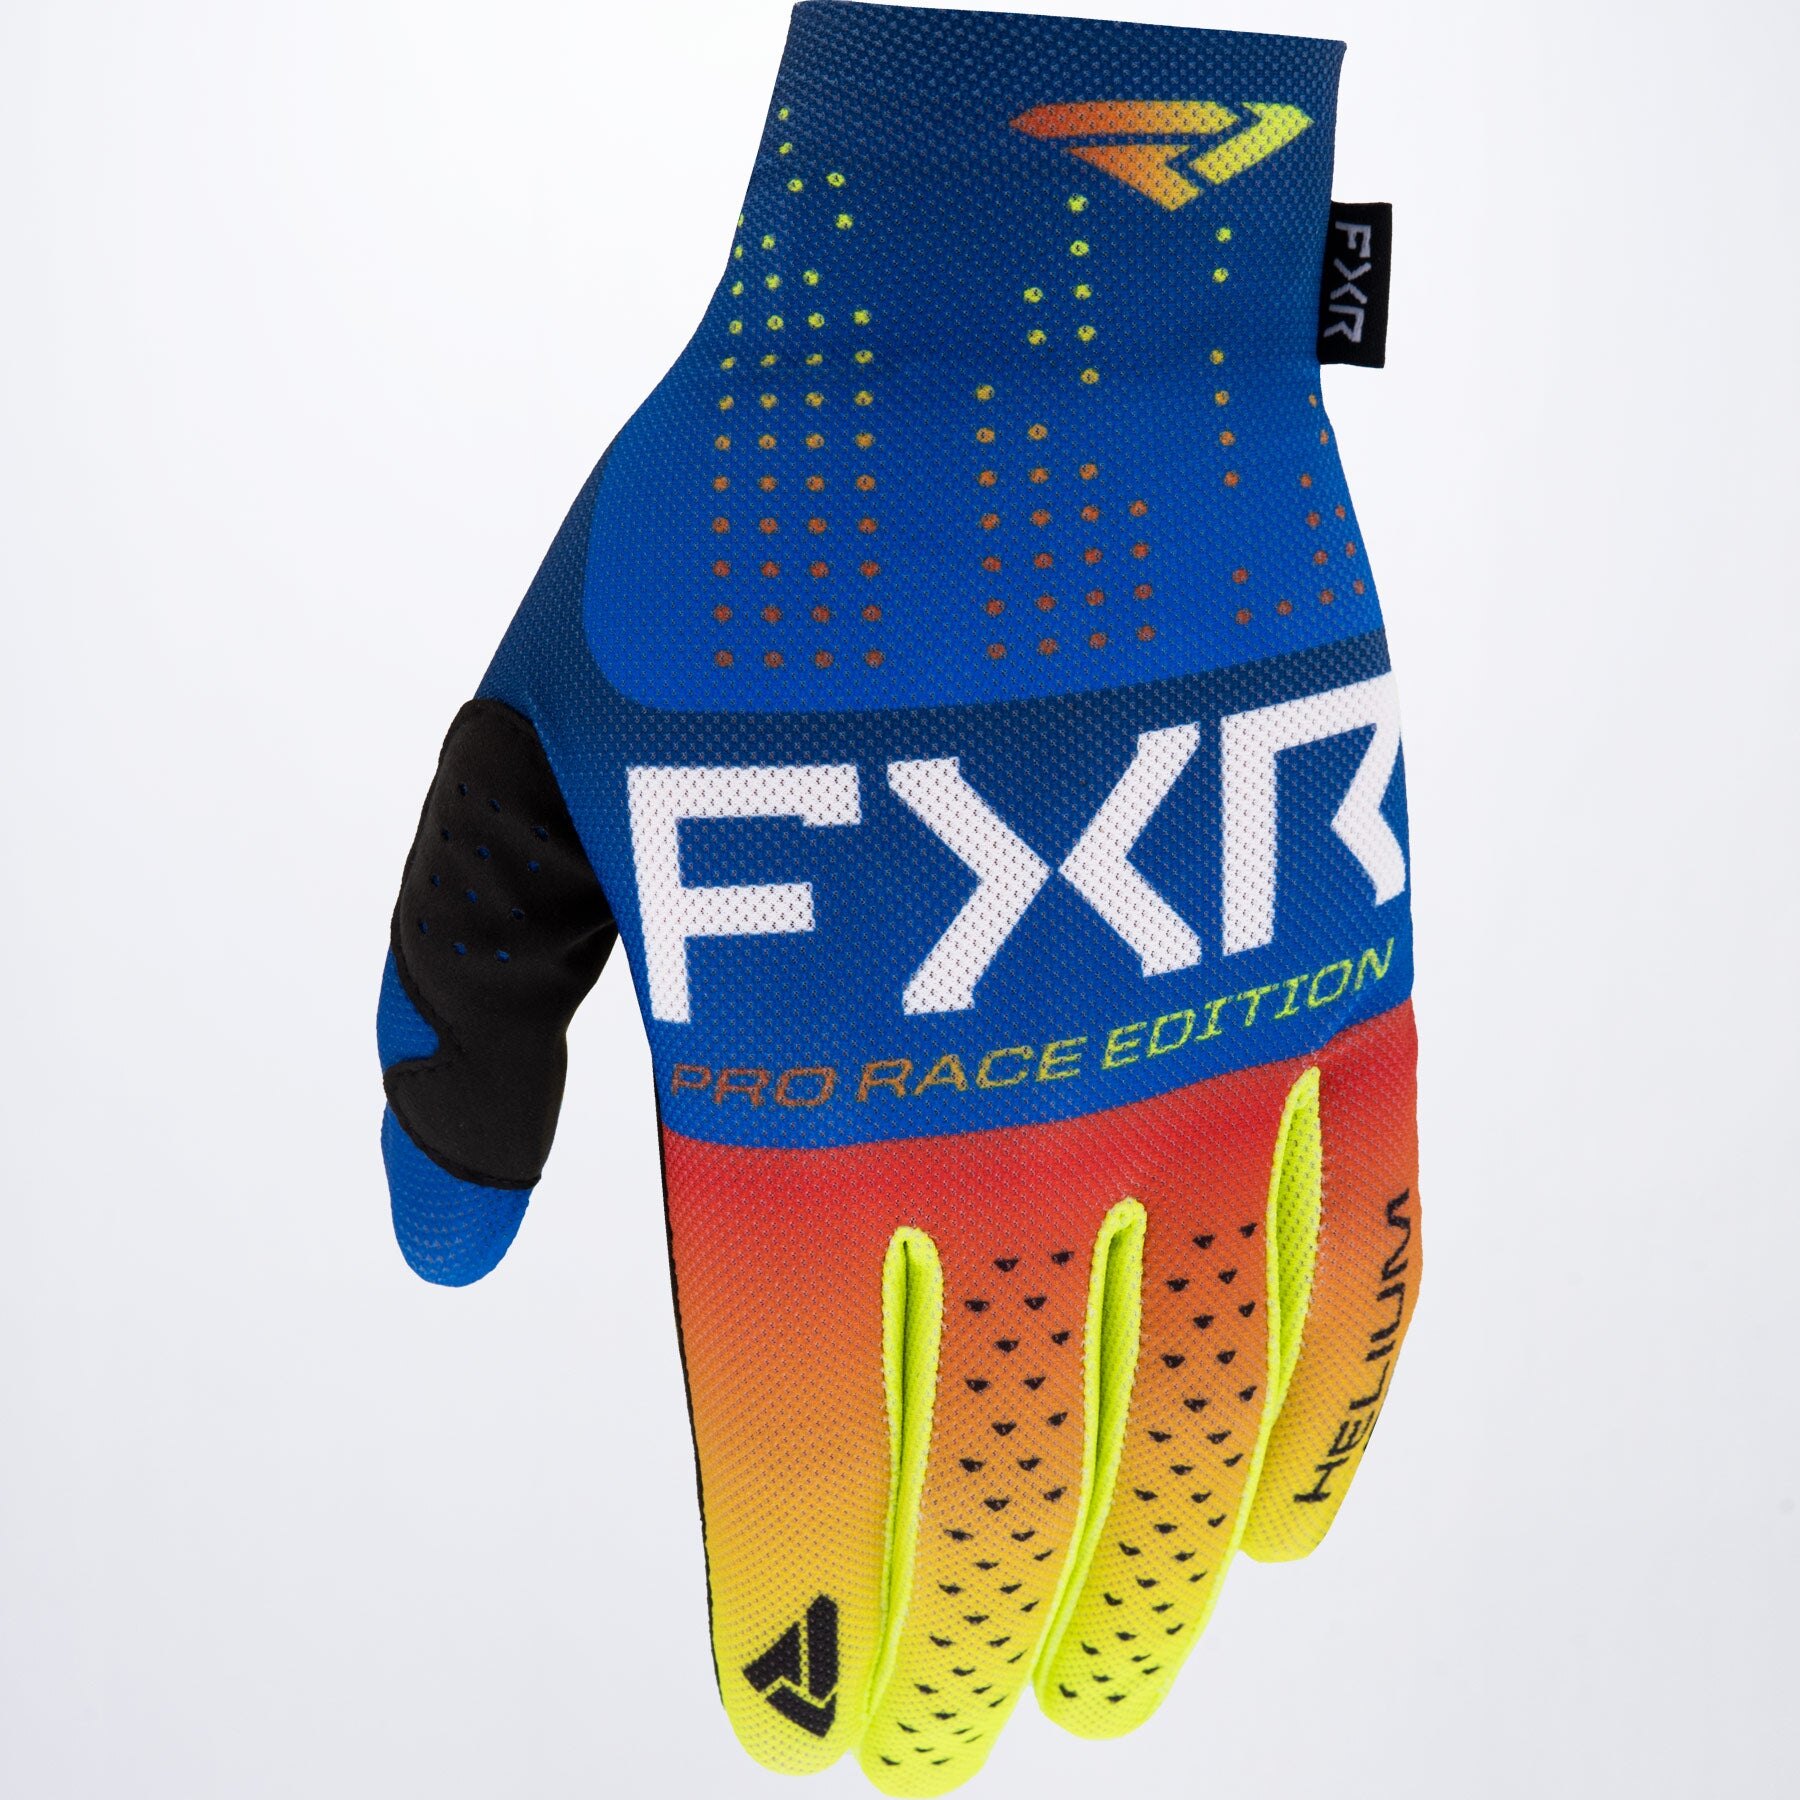 Pro Fit Air MX Glove 2XL Black/White